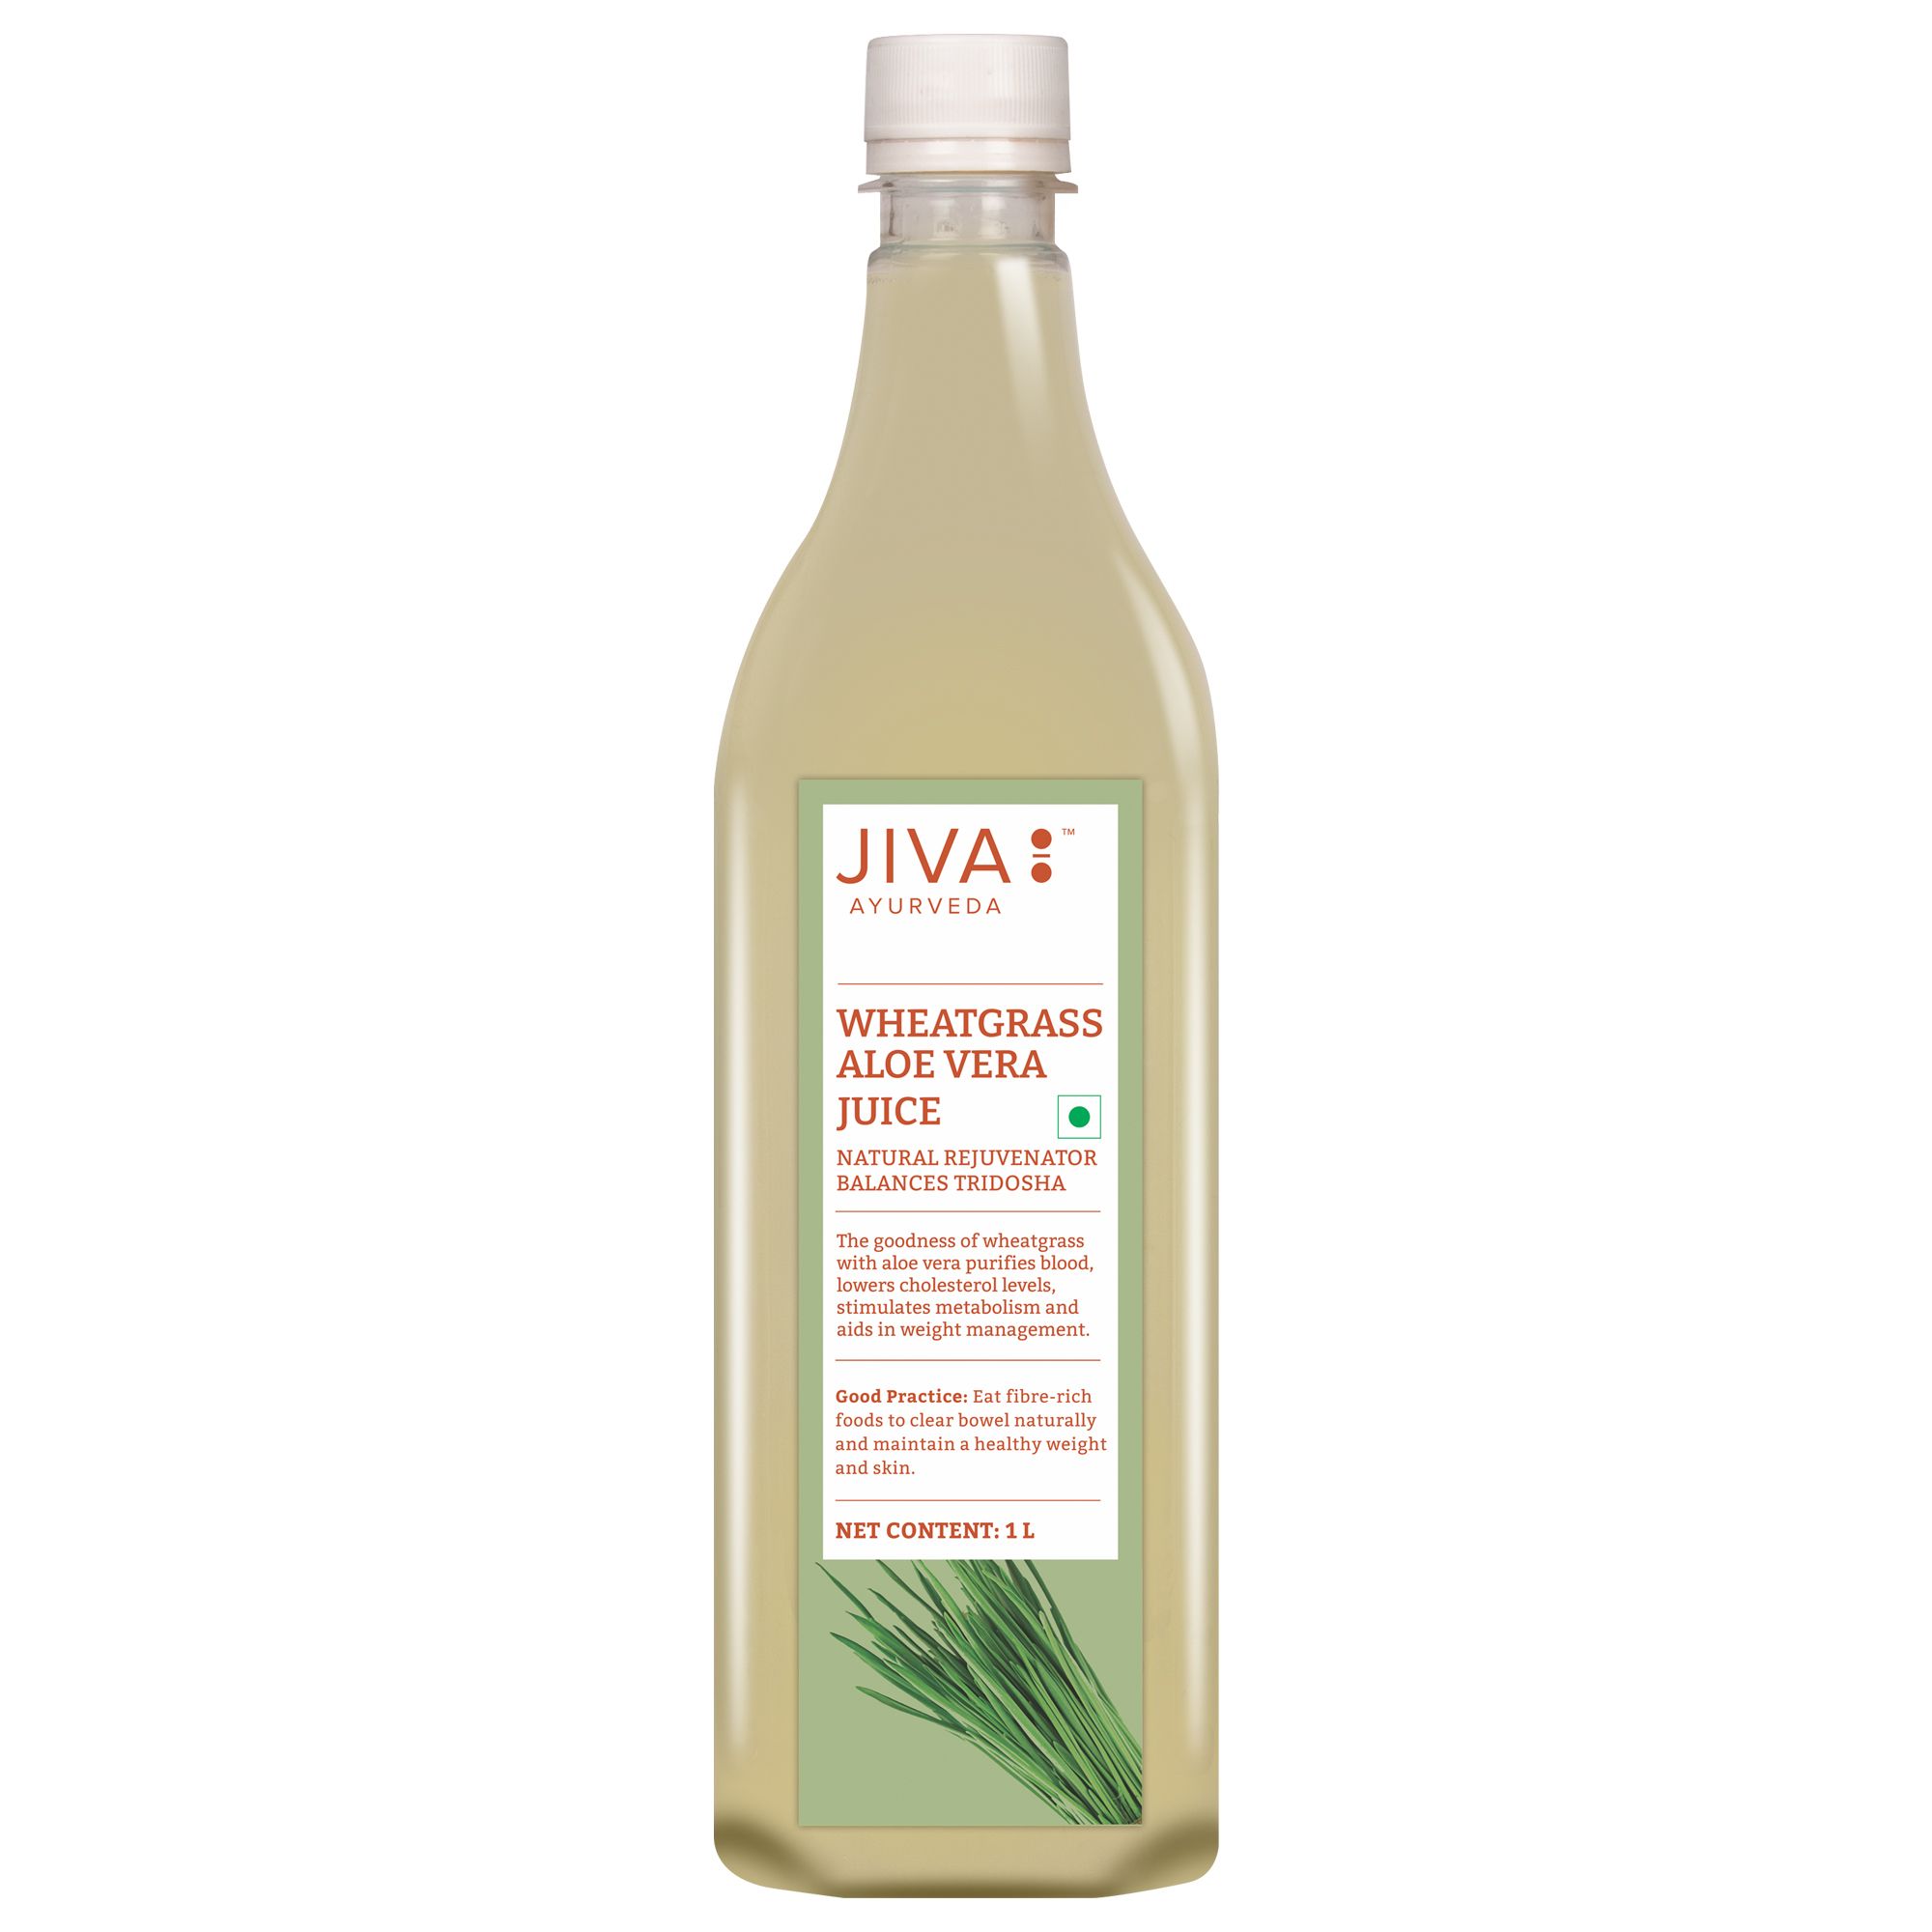 Buy Jiva Ayurveda Aloe Vera Juice at Best Price Online